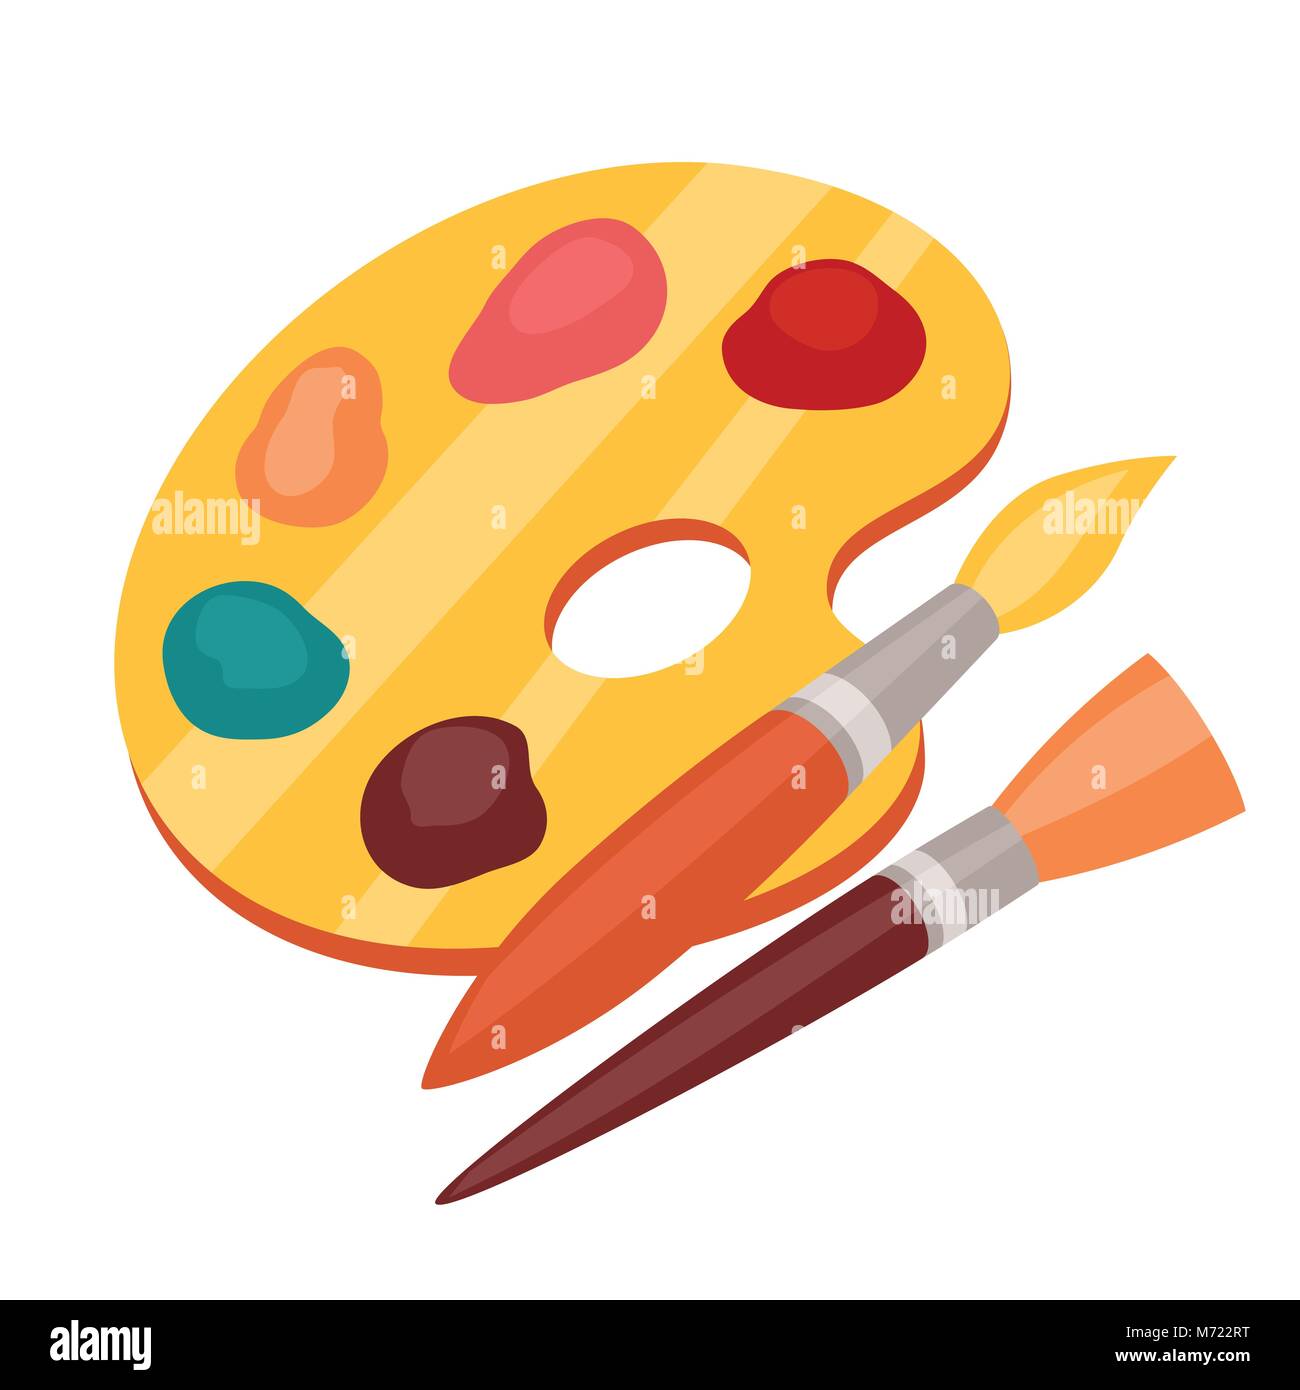 Kunst Farbpalette mit Farben und Pinsel Stock-Vektorgrafik - Alamy